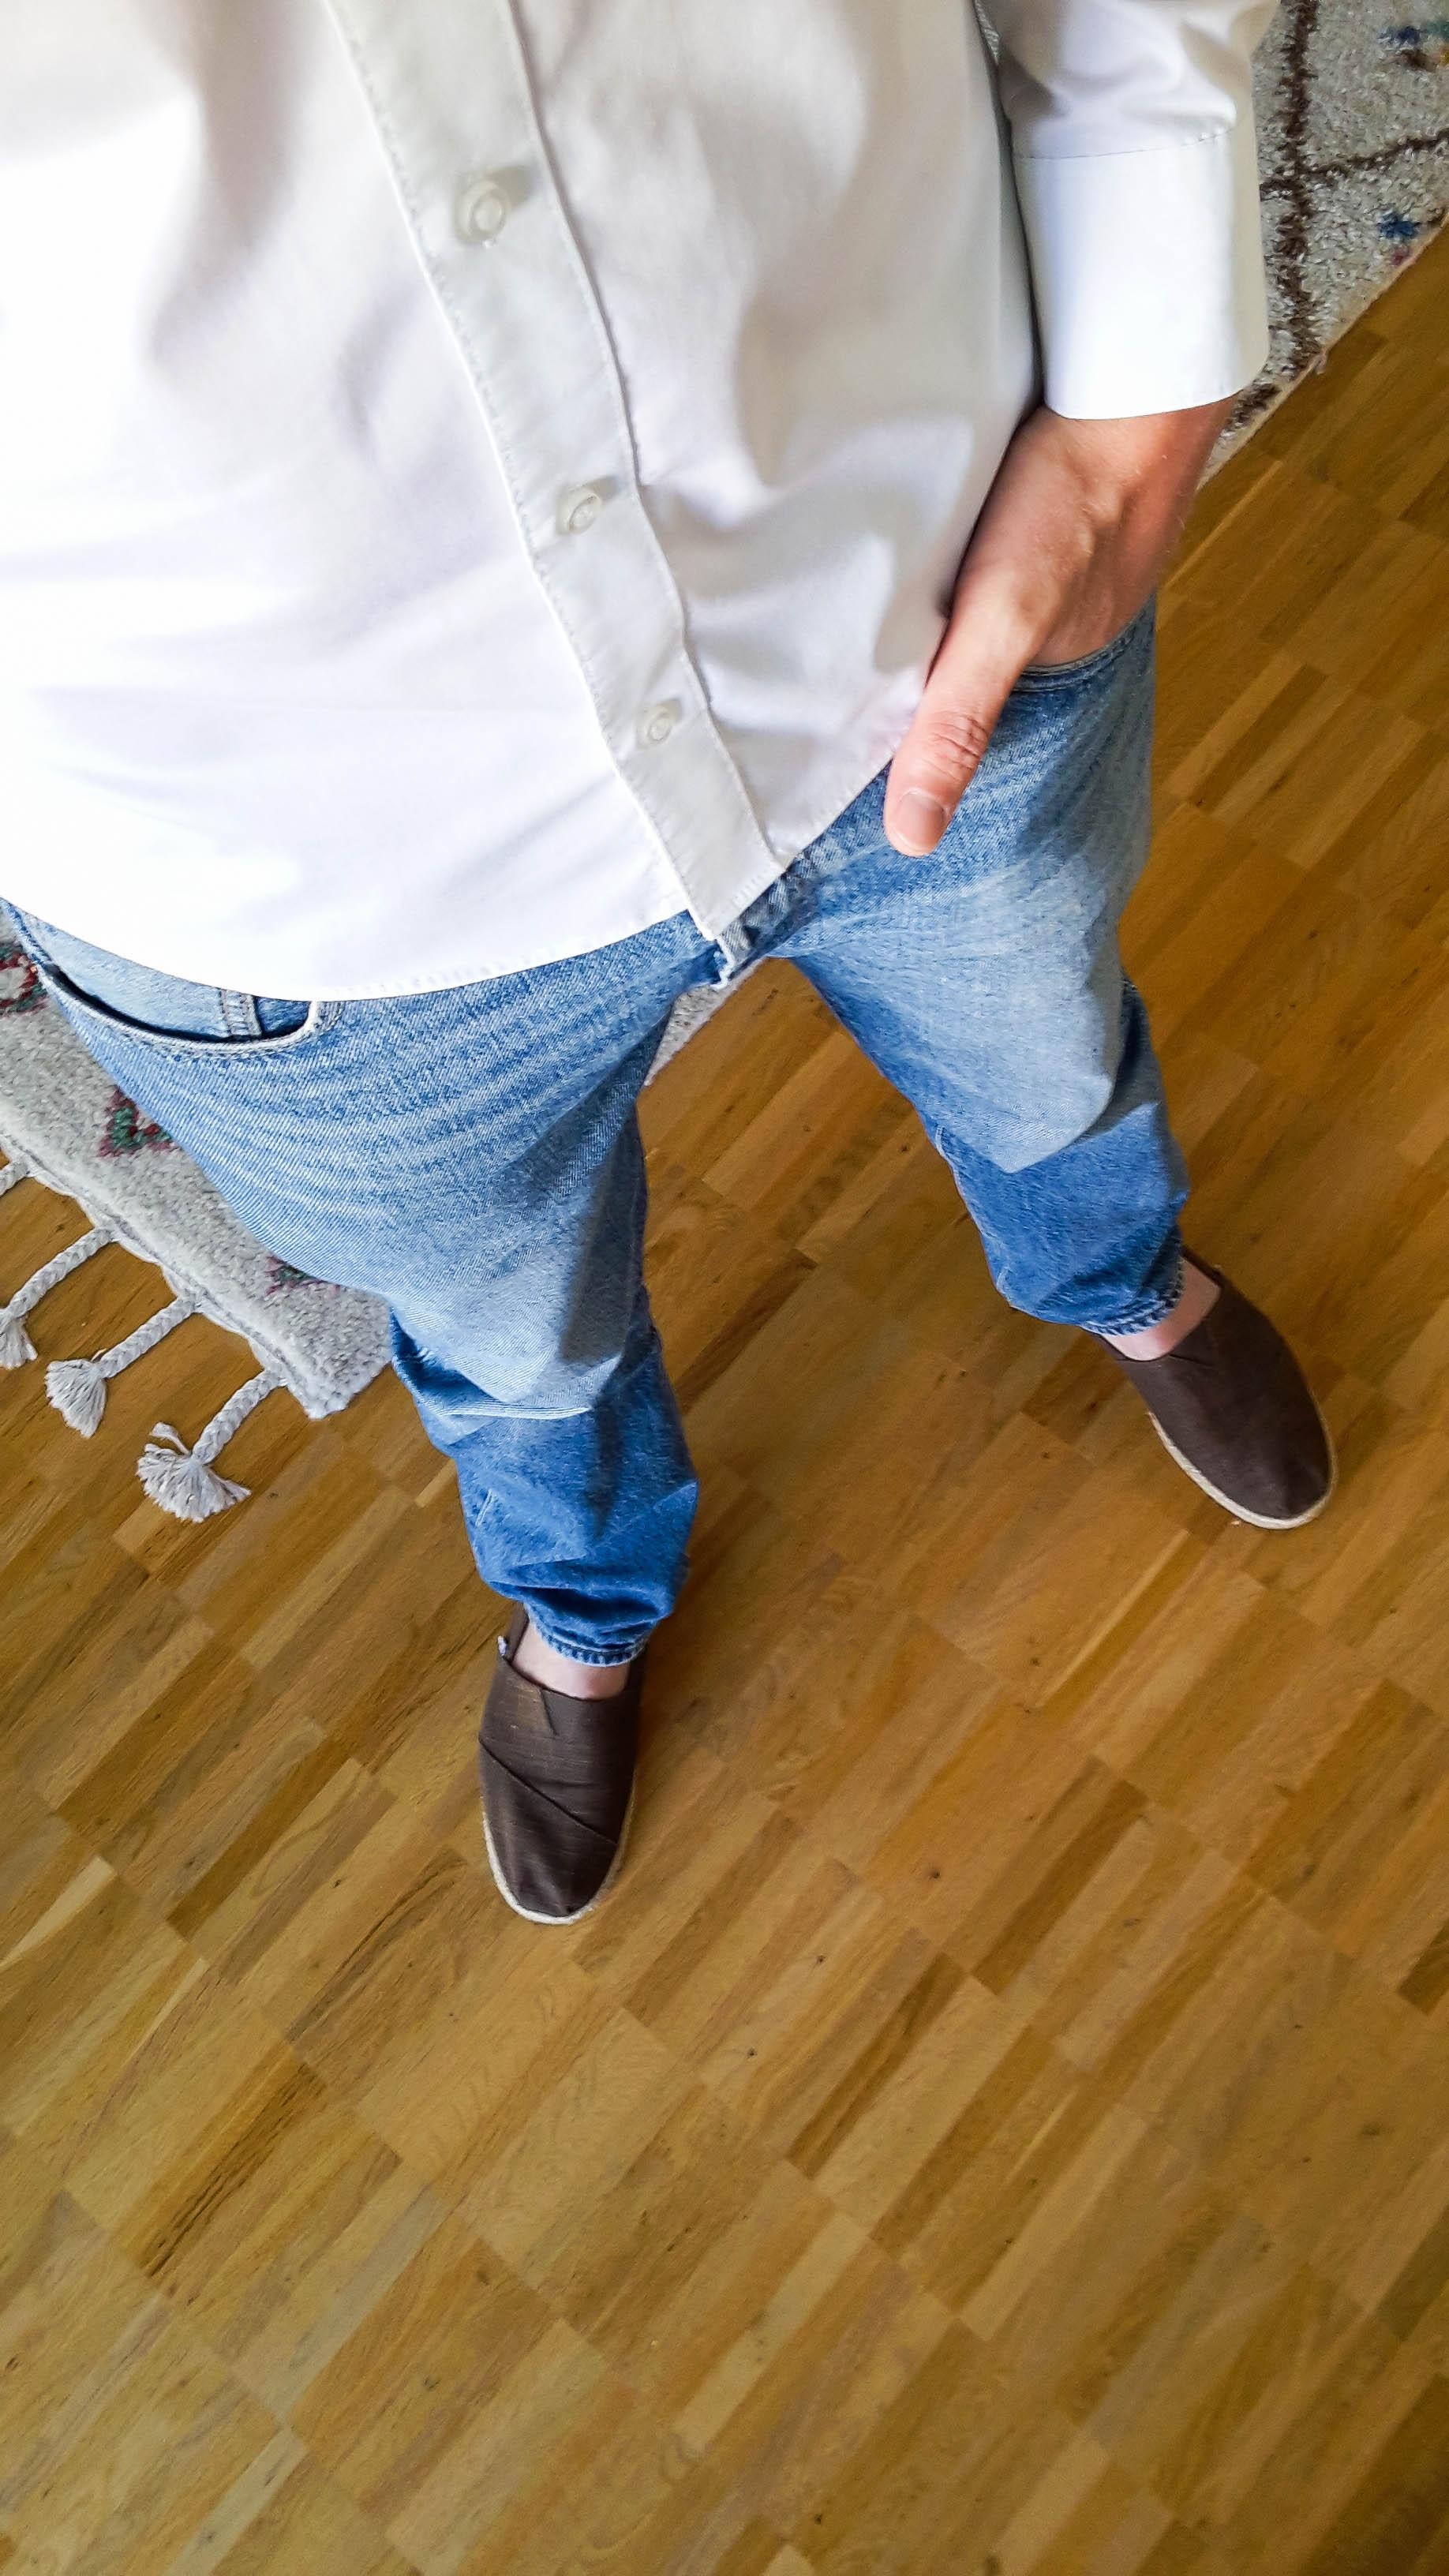 #jeans geht immer. #fashionlieblinge